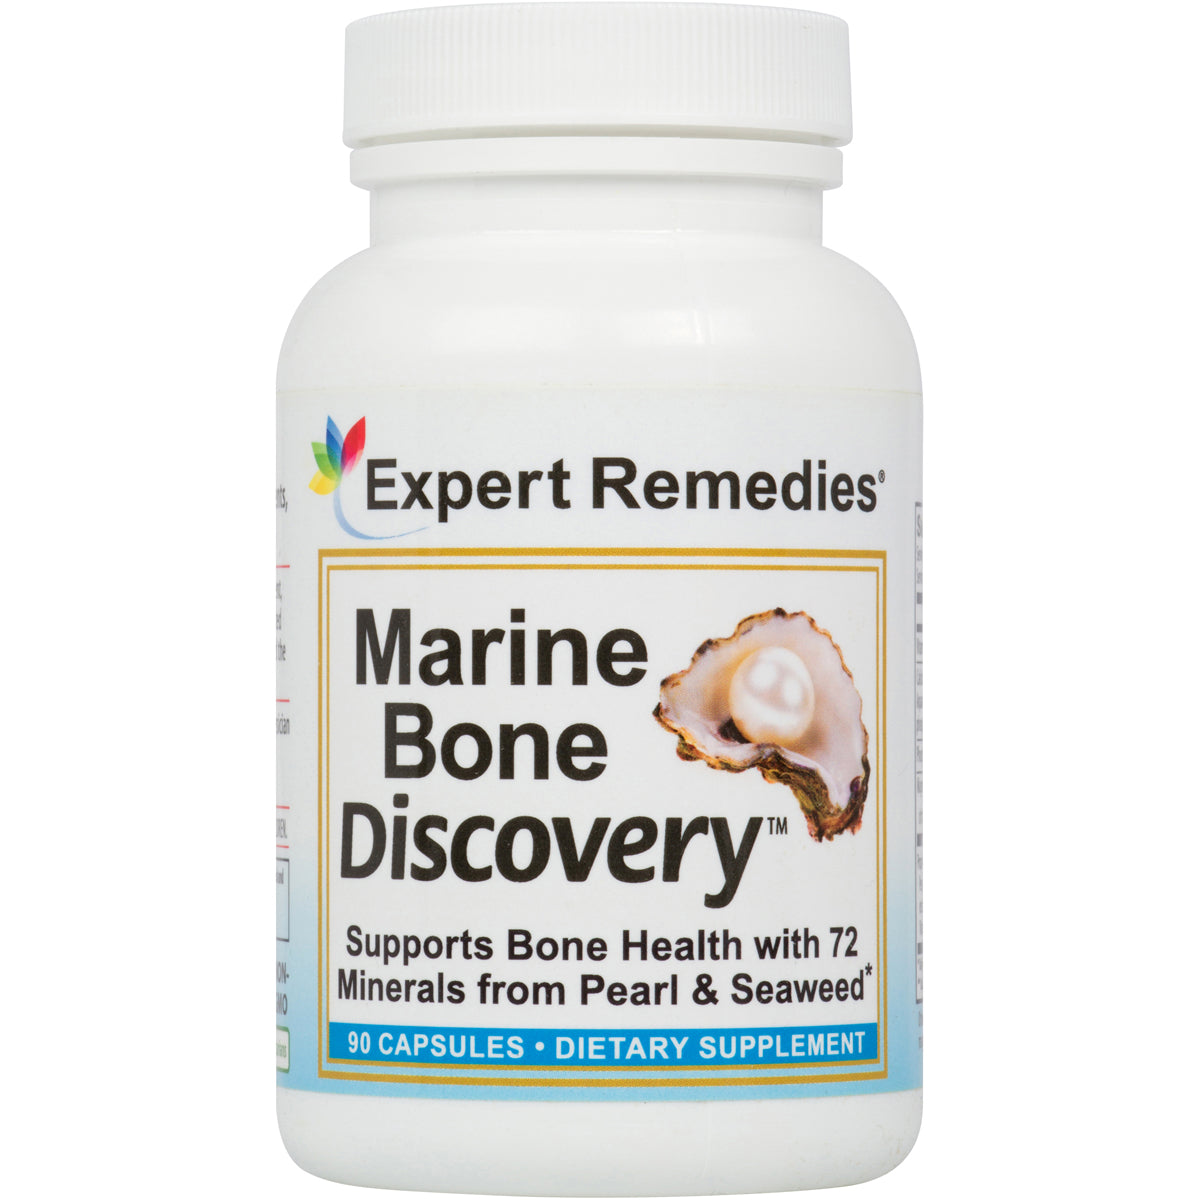 Get 1 Bottle of Marine Bone Discovery